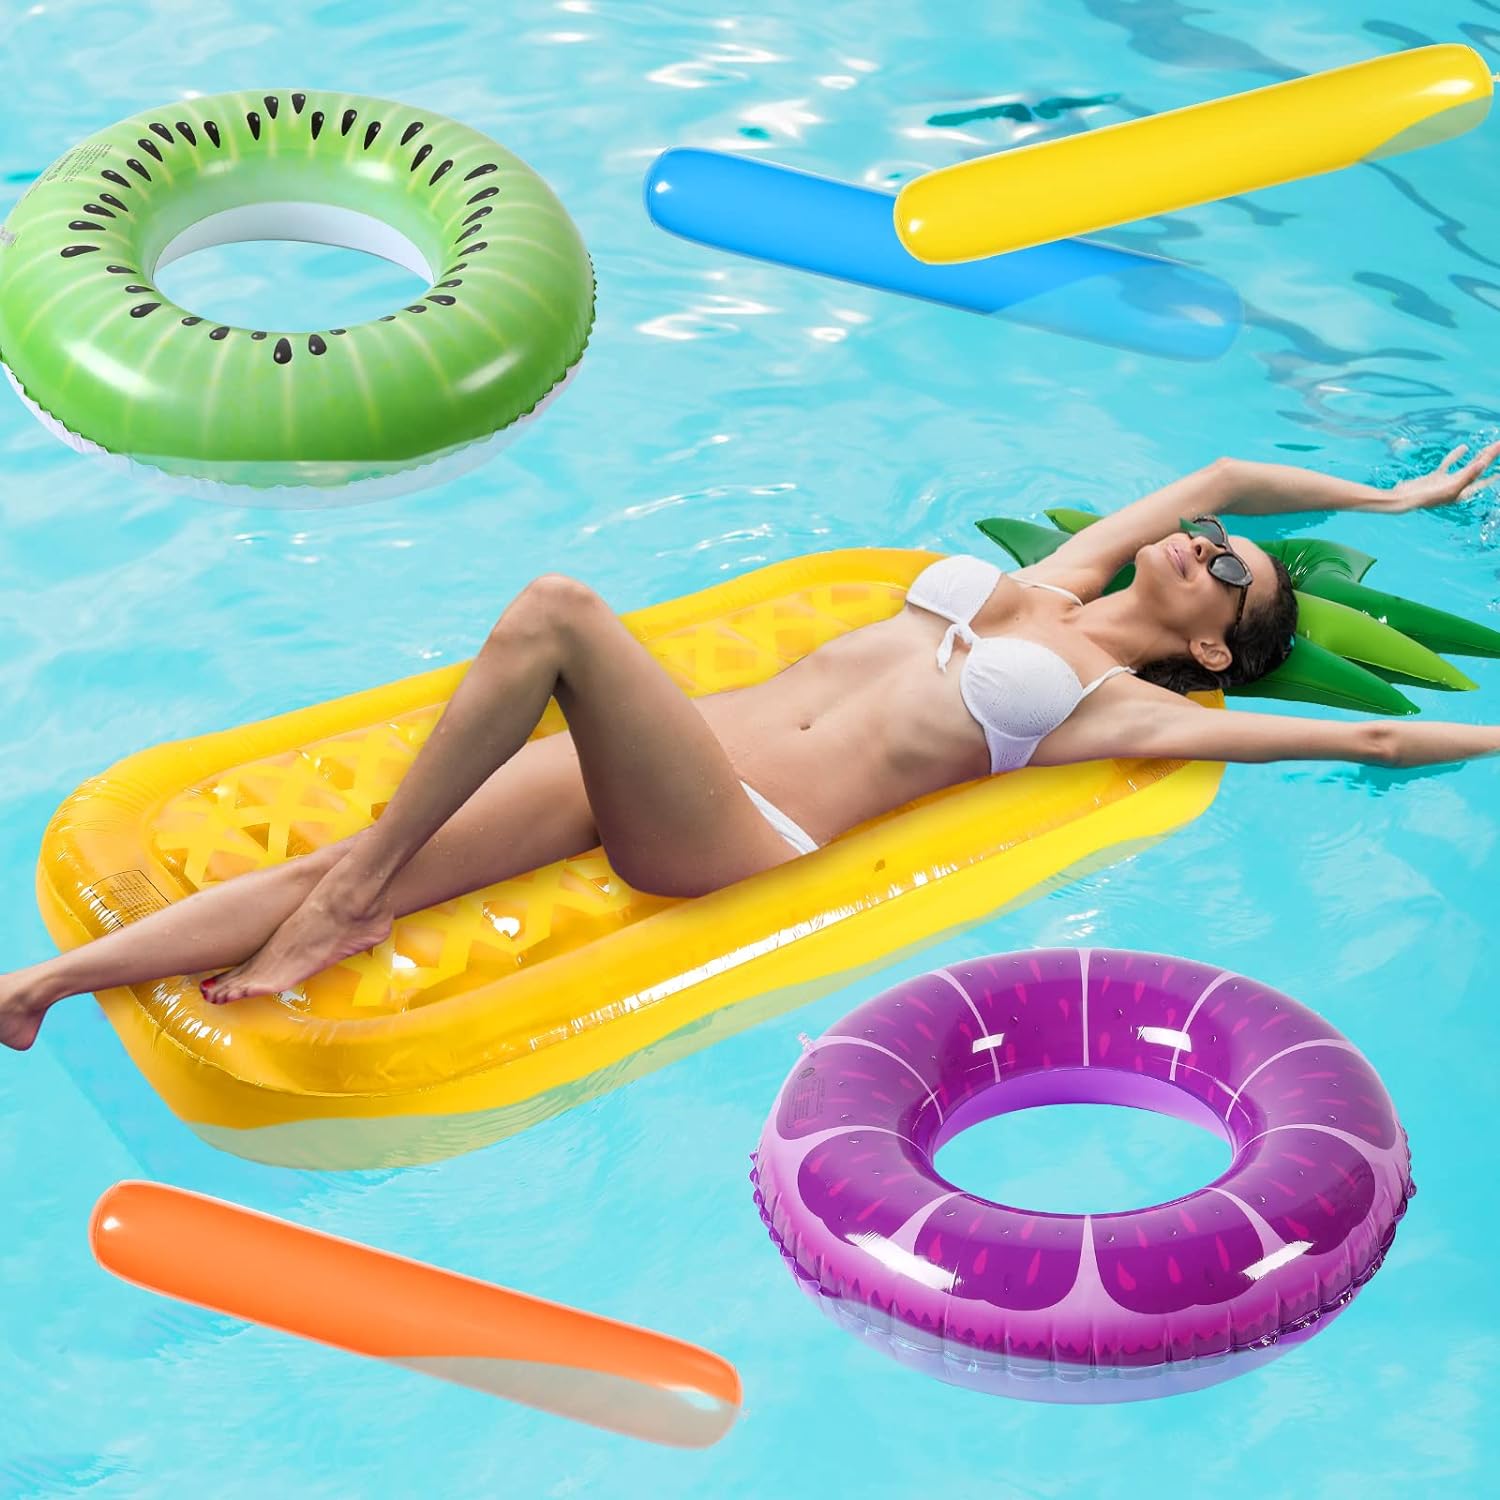 Flotador inflable de piscina | Pack de 10 unidades